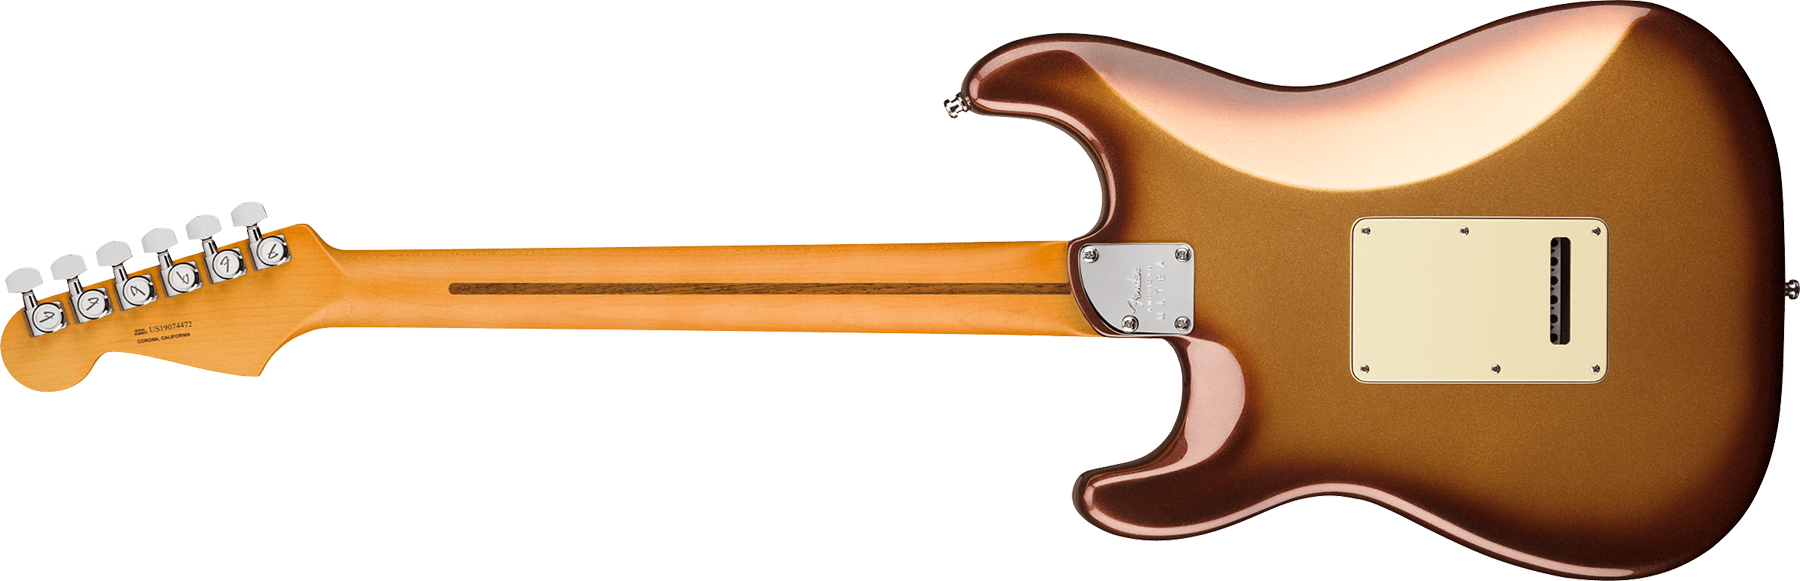 Fender Strat American Ultra 2019 Usa Mn - Mocha Burst - E-Gitarre in Str-Form - Variation 2